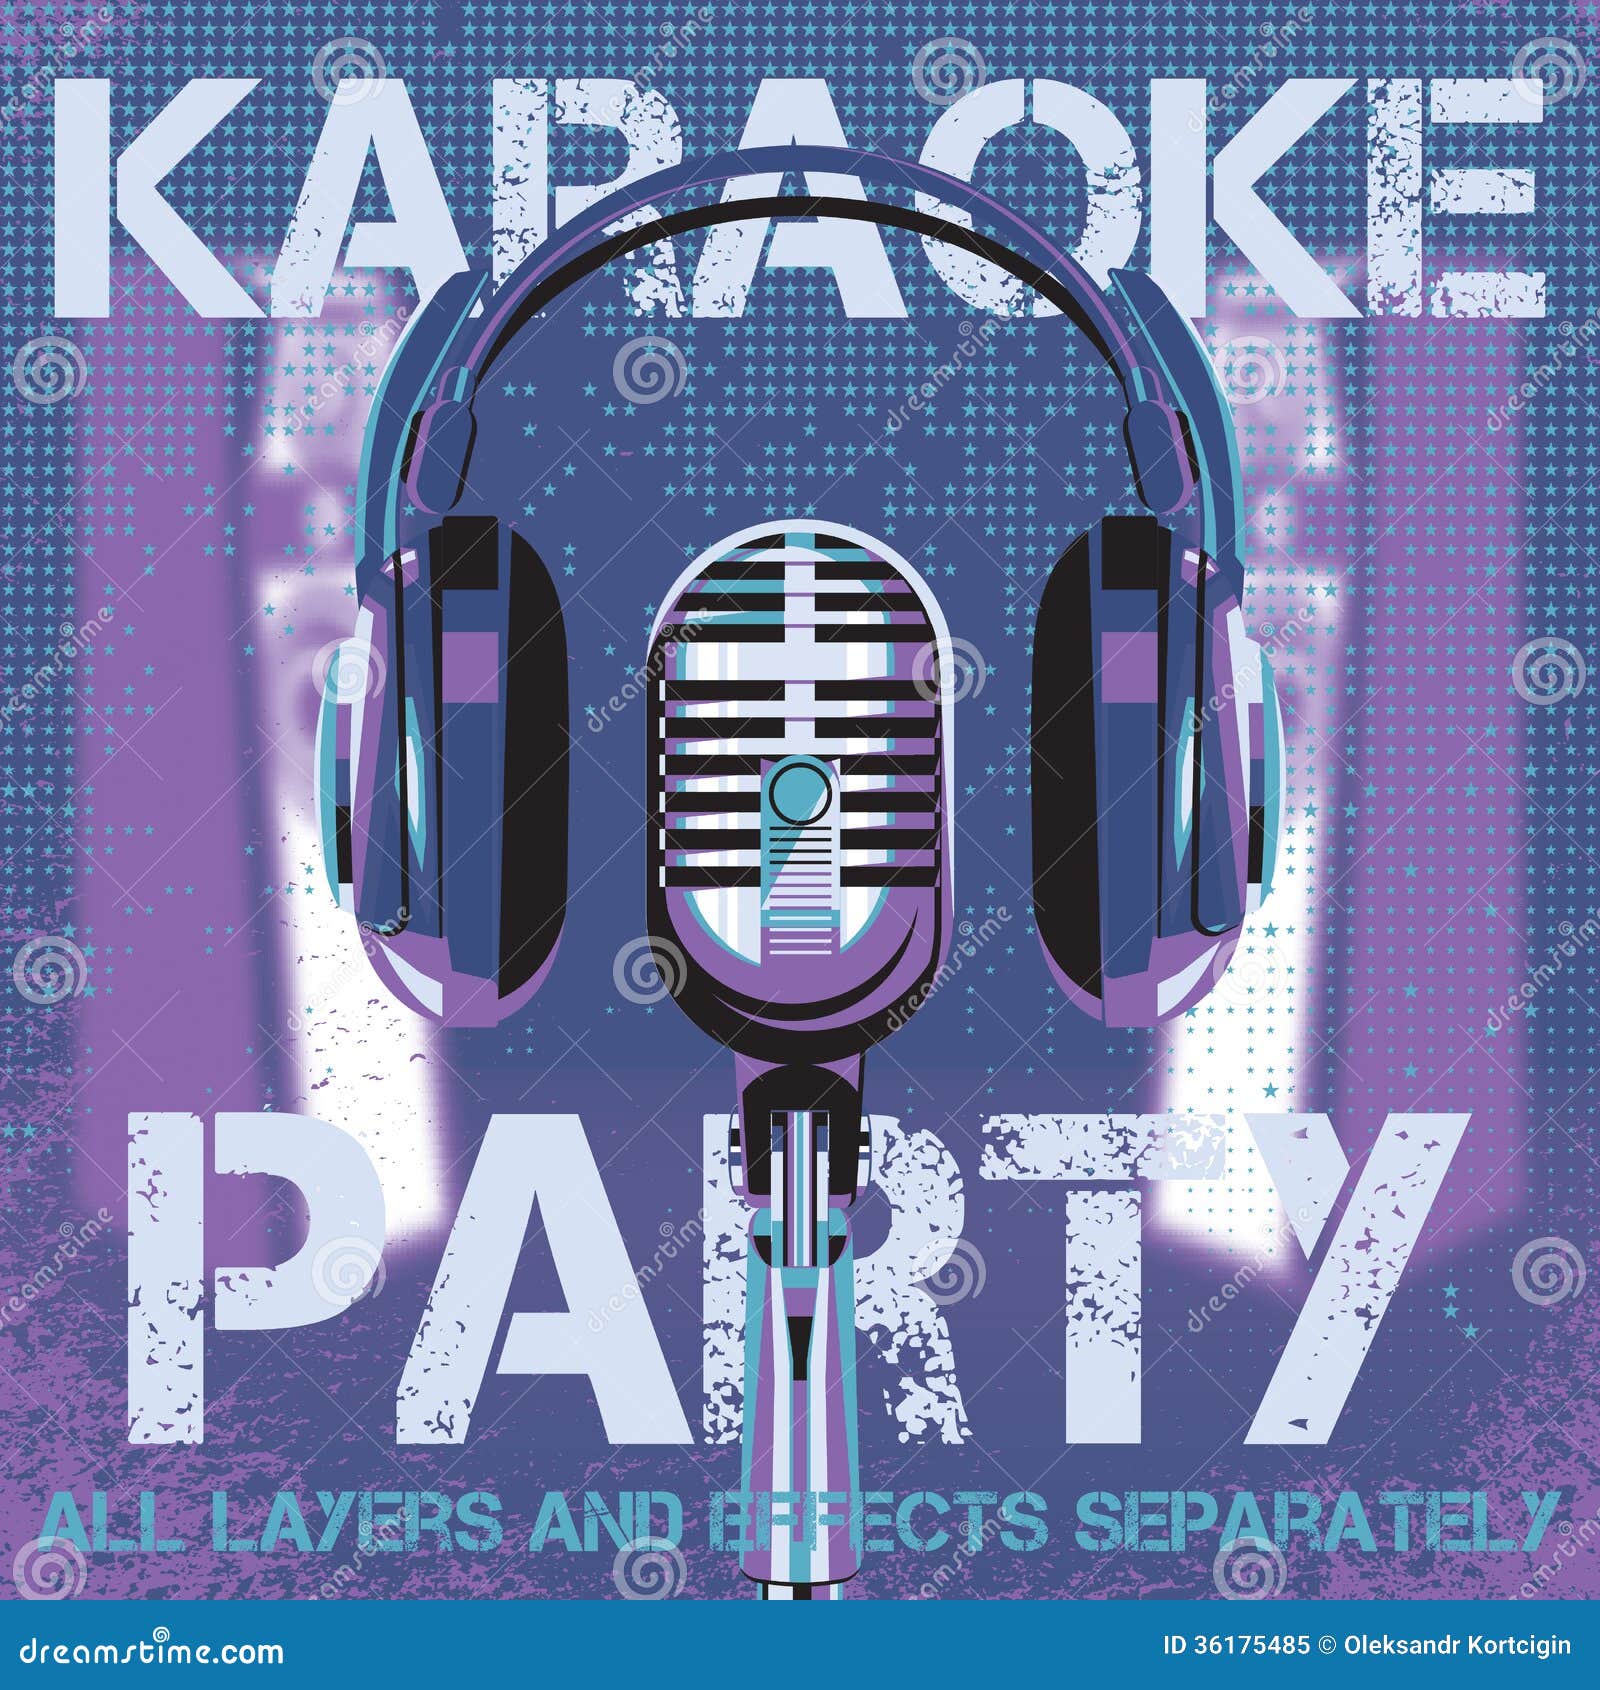 Karaoke Party Free